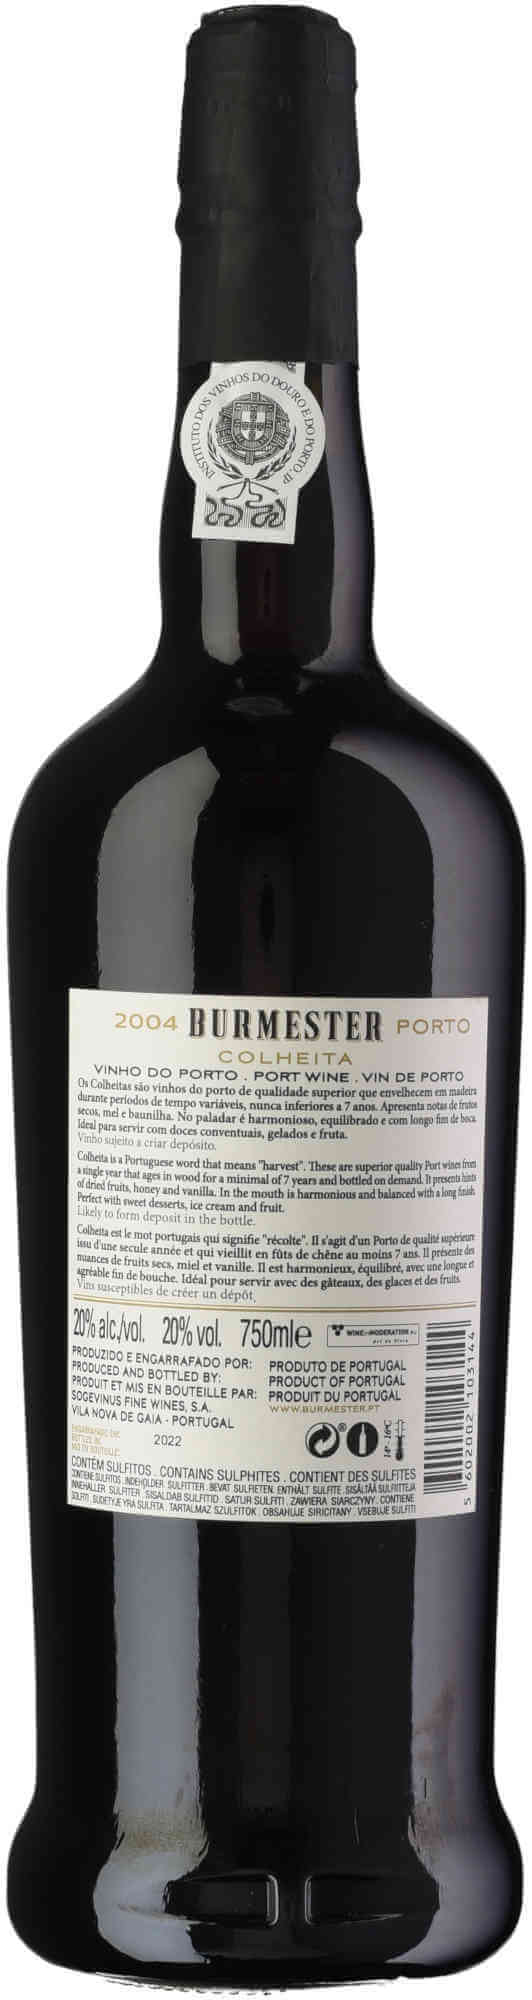 Burmester-Colheita-2004-Port-Rueckseite